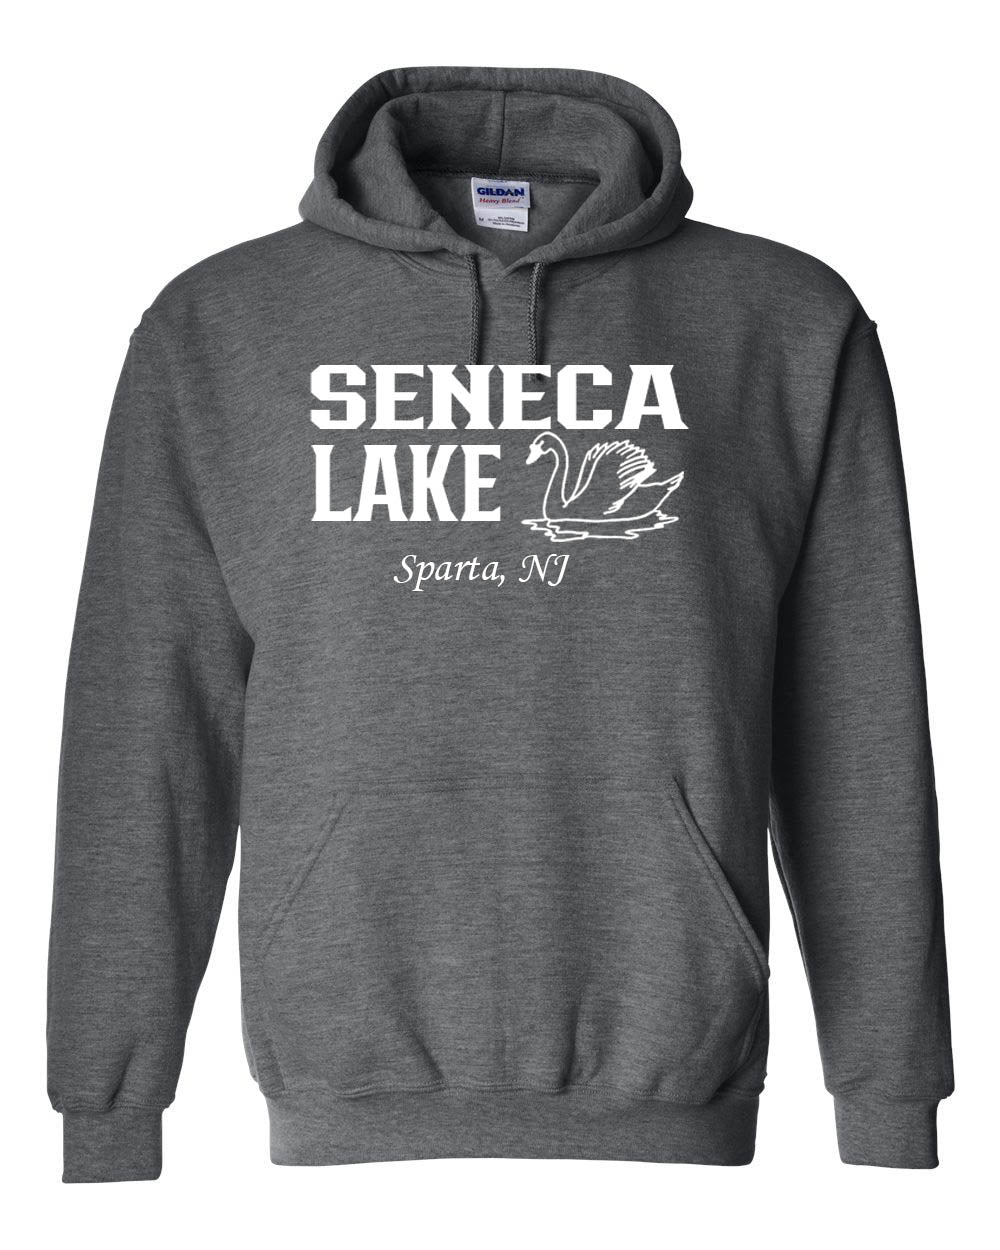 Seneca Lake Design 1 Hooded Sweatshirt